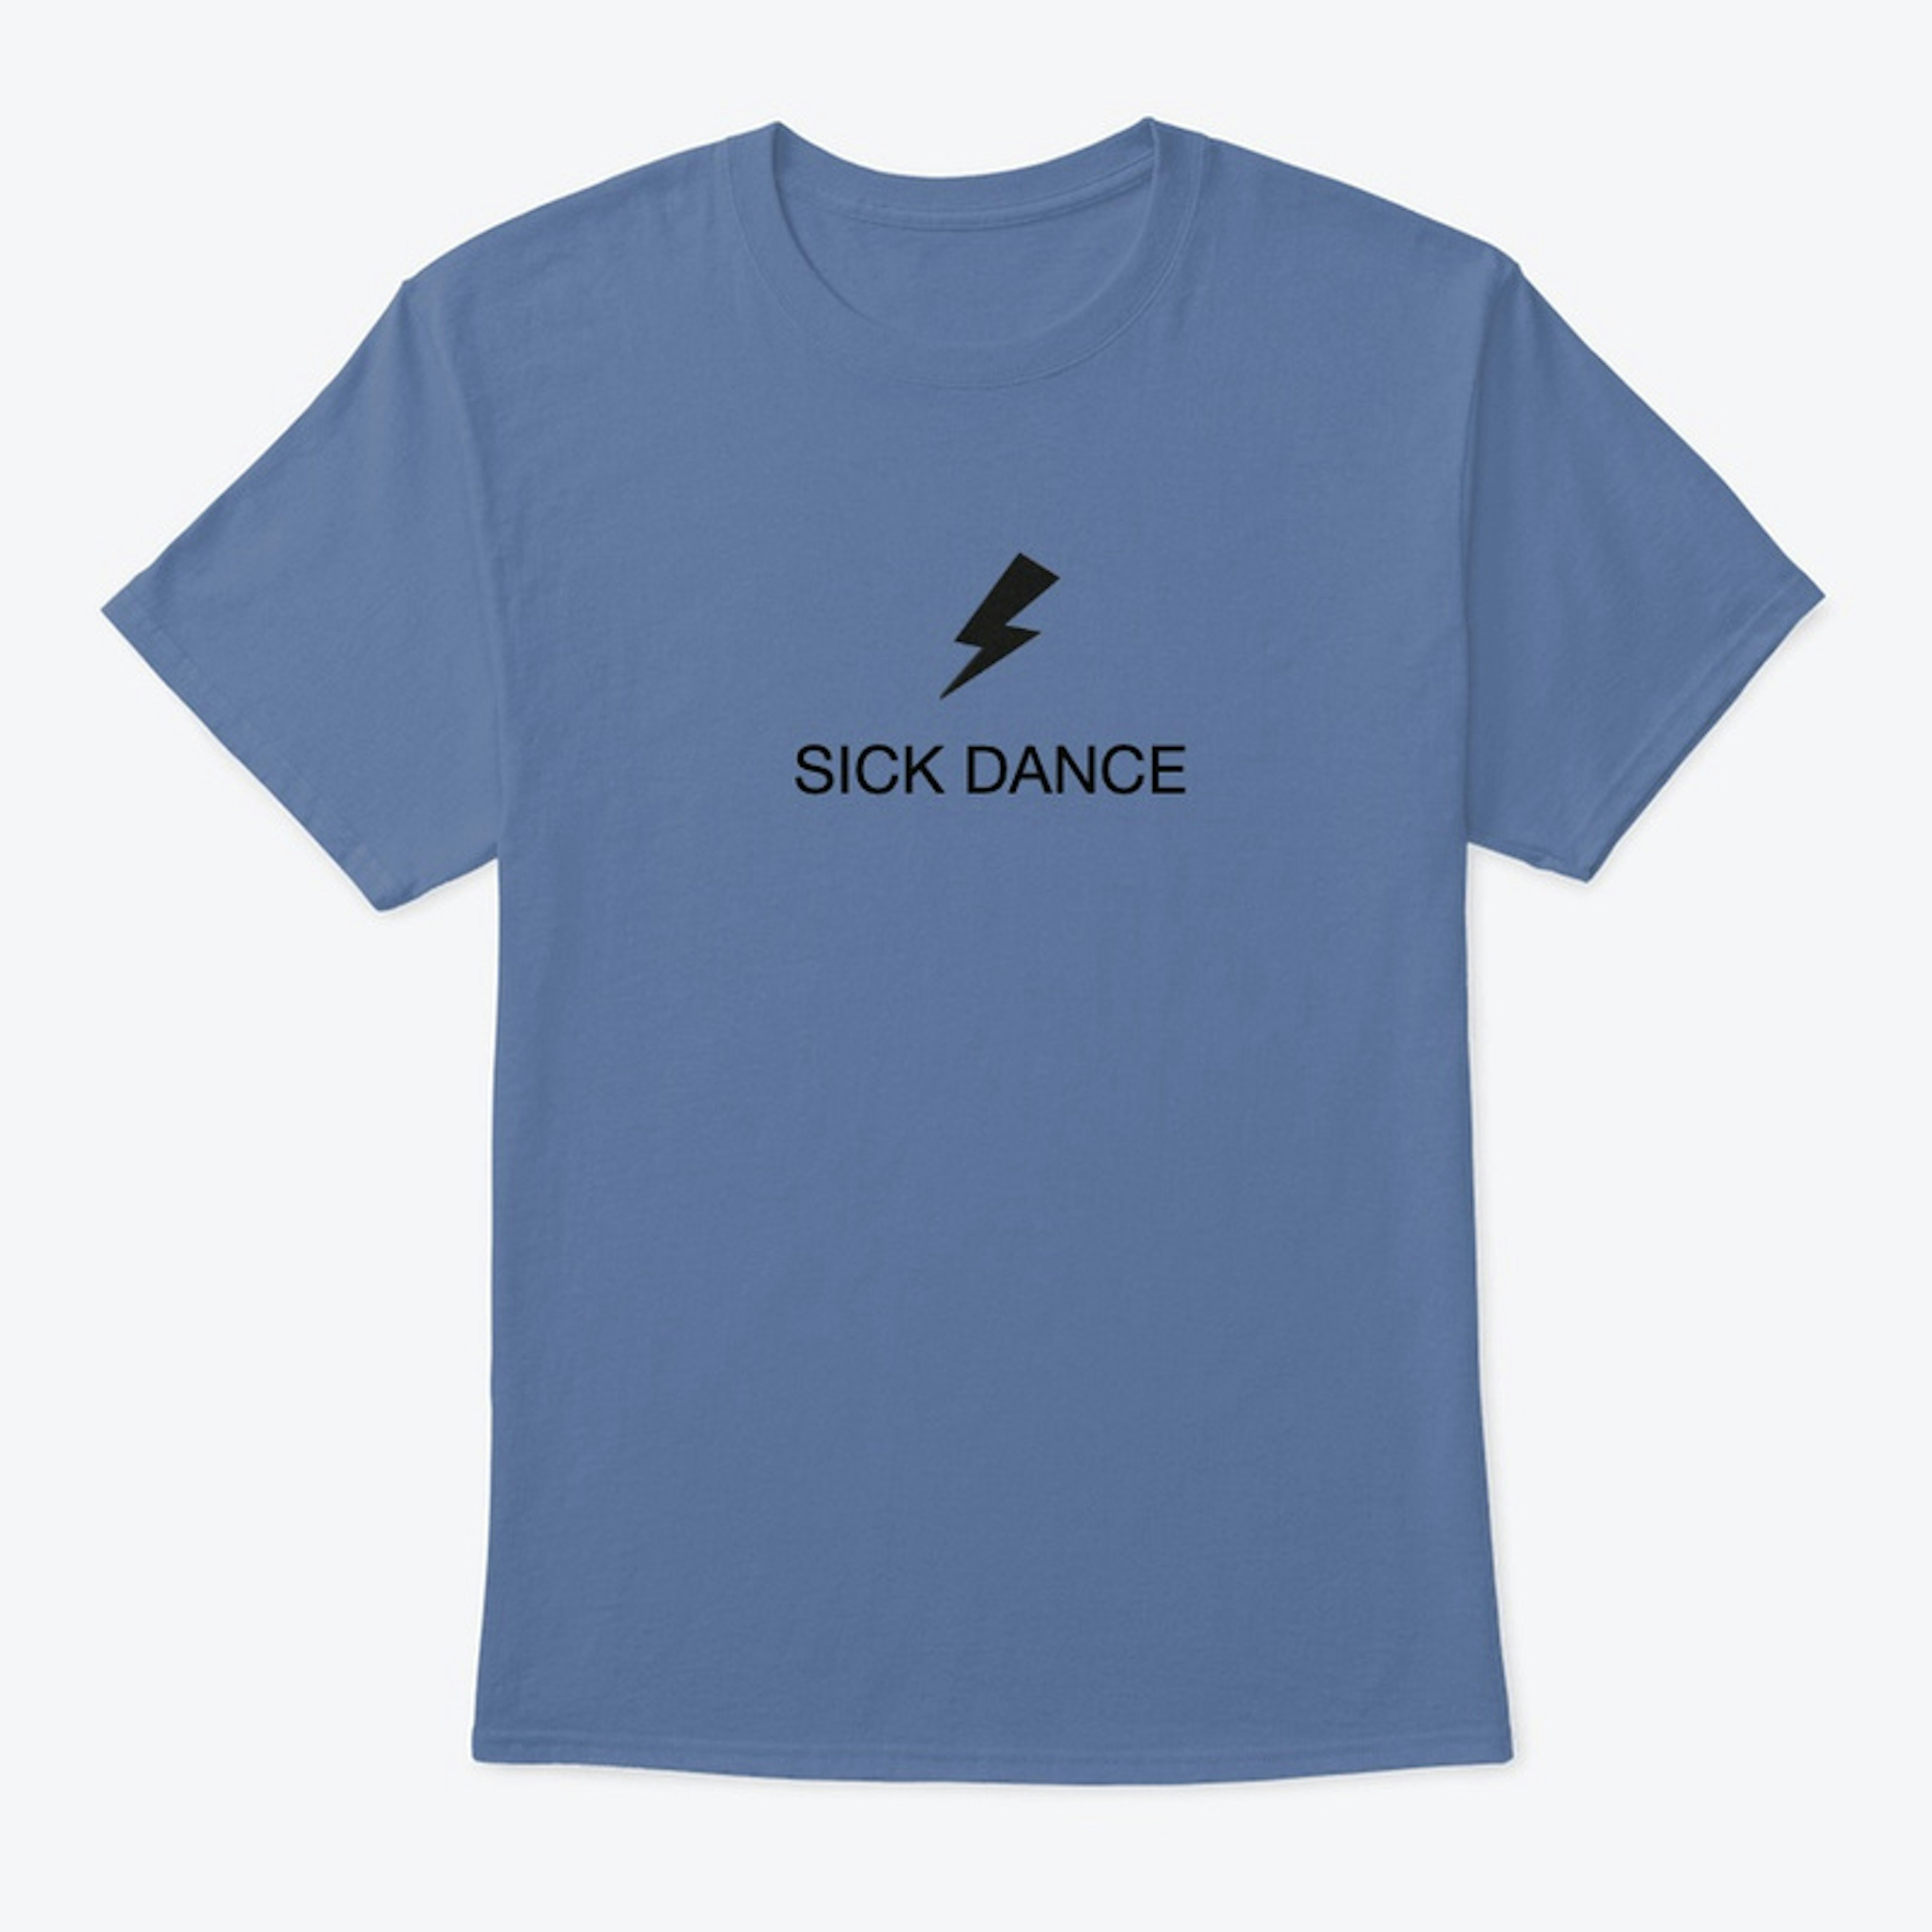 SICK DANCE